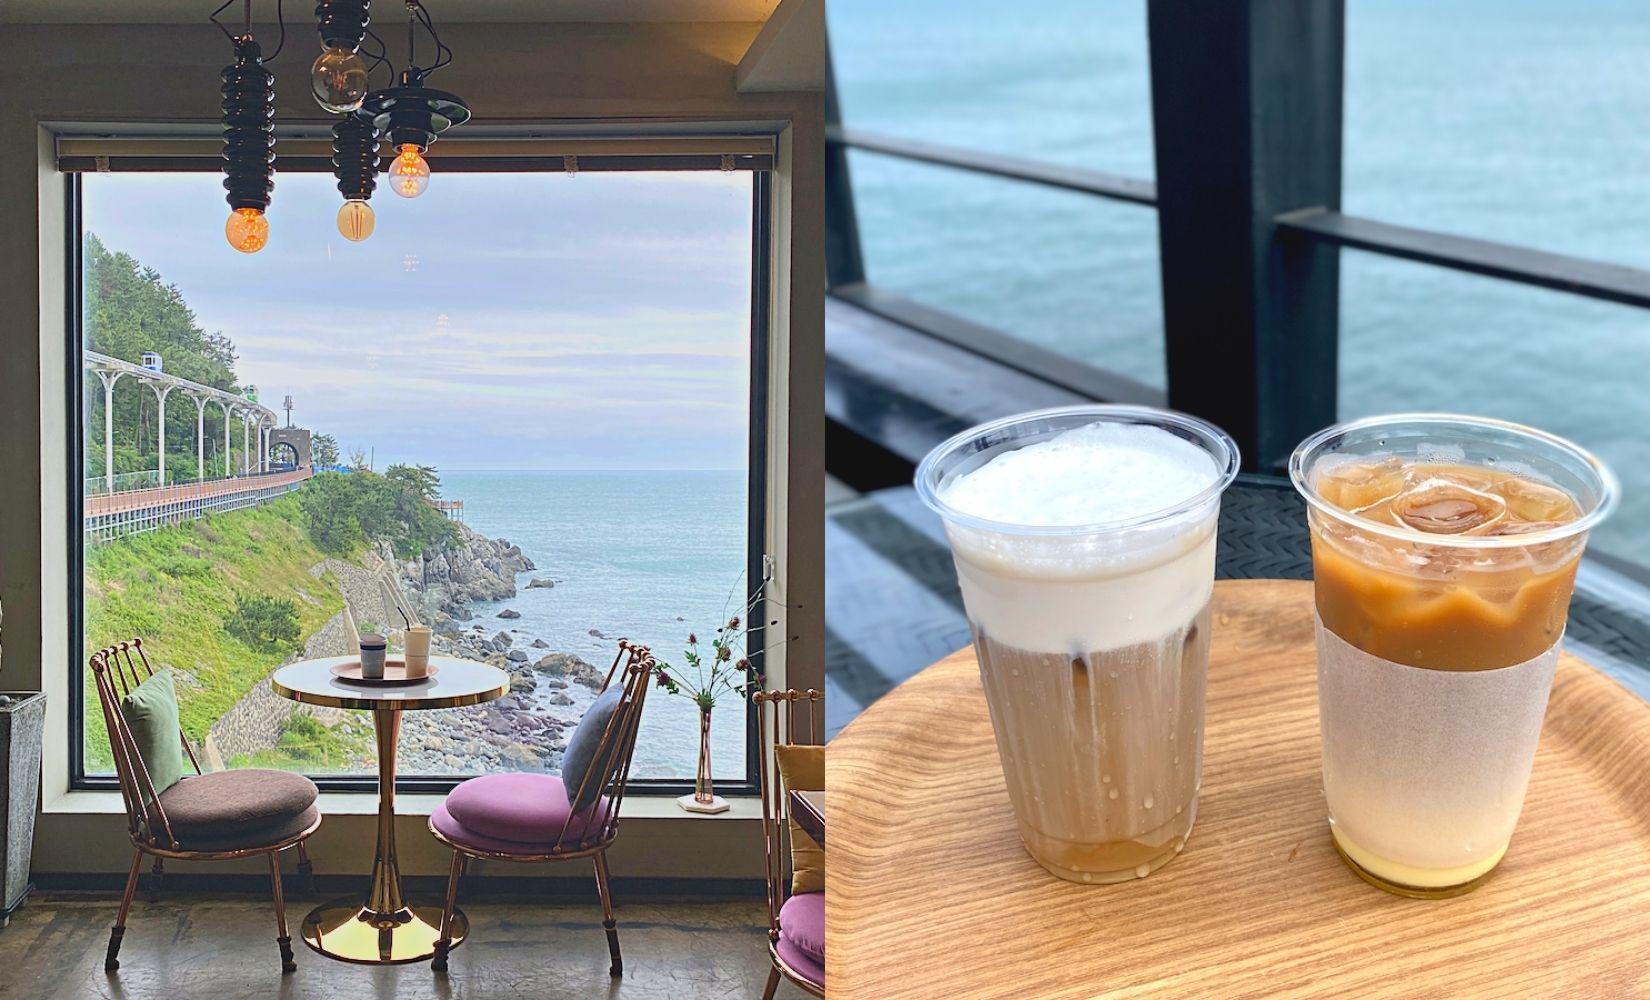 Edge 993: Quán cafe view đại dương tuyệt đẹp ở Haeundae, Busan